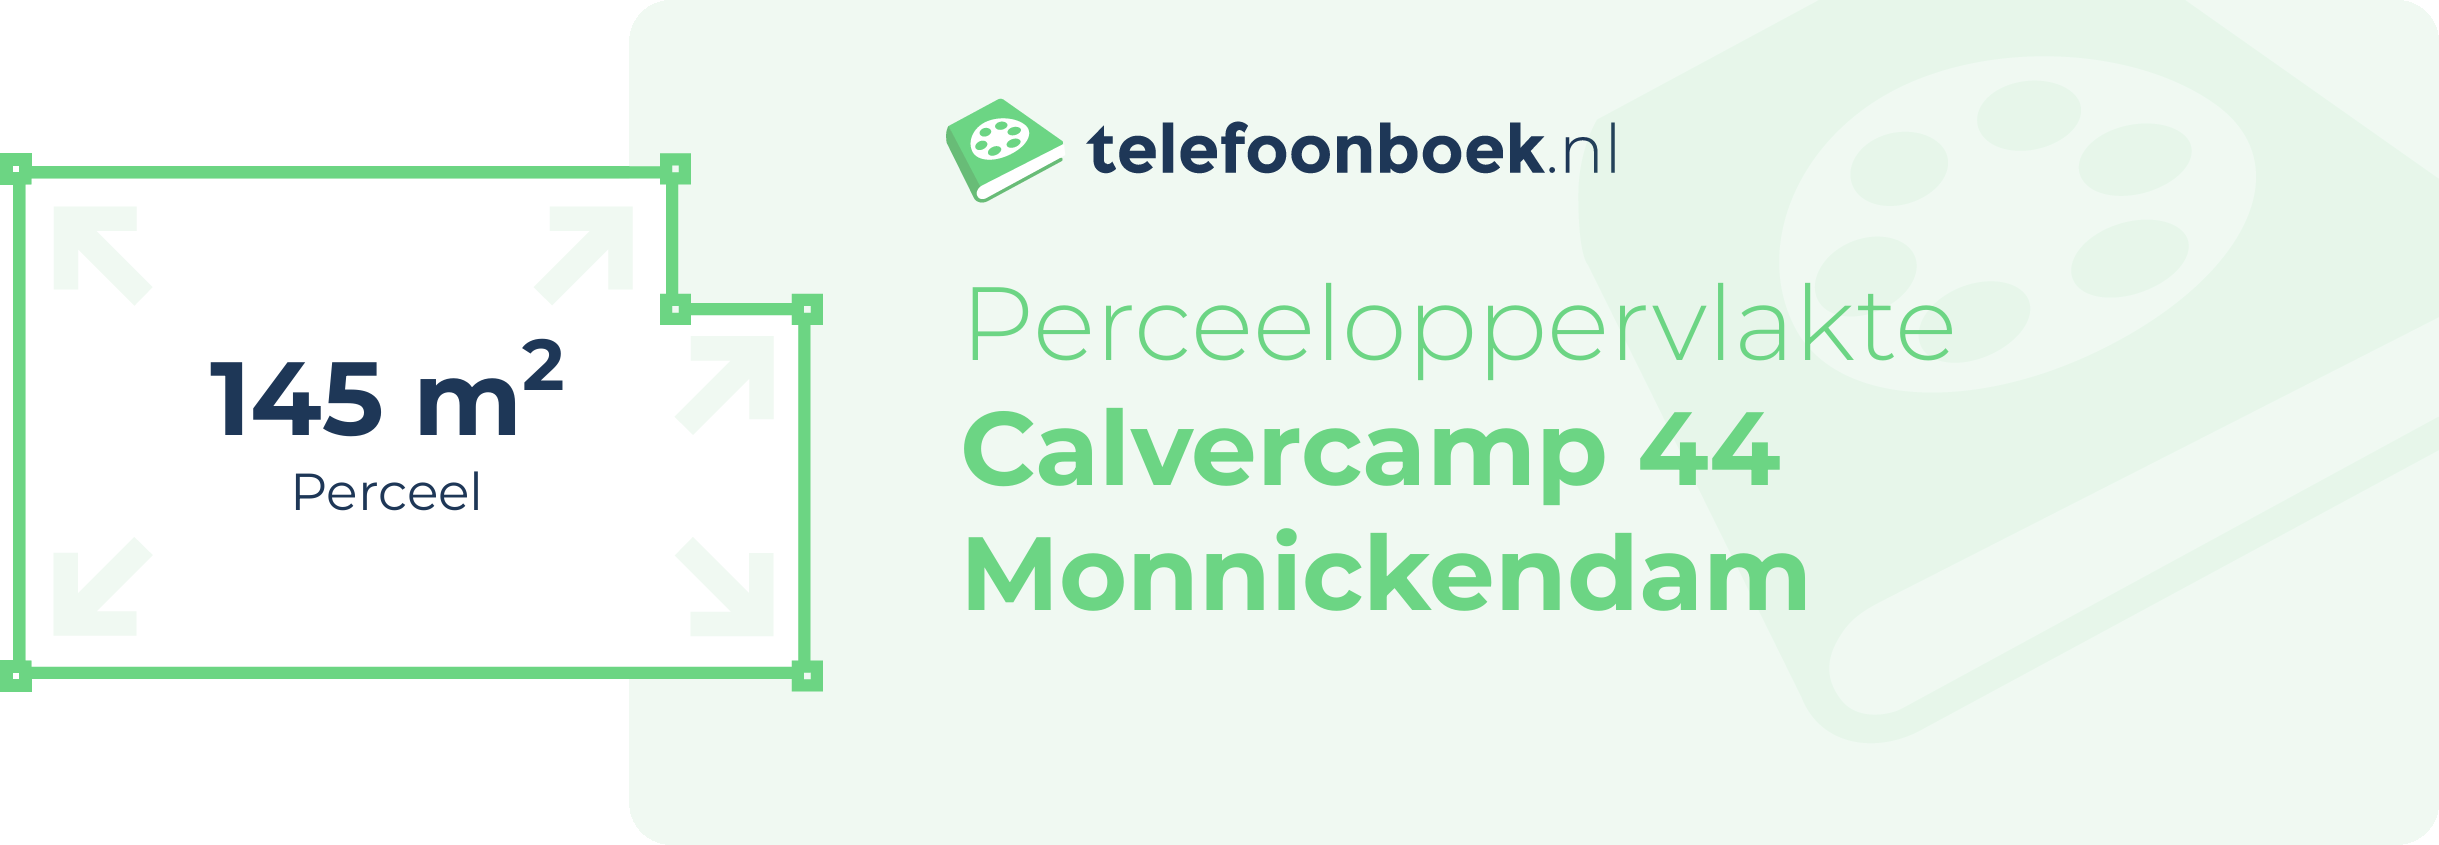 Perceeloppervlakte Calvercamp 44 Monnickendam